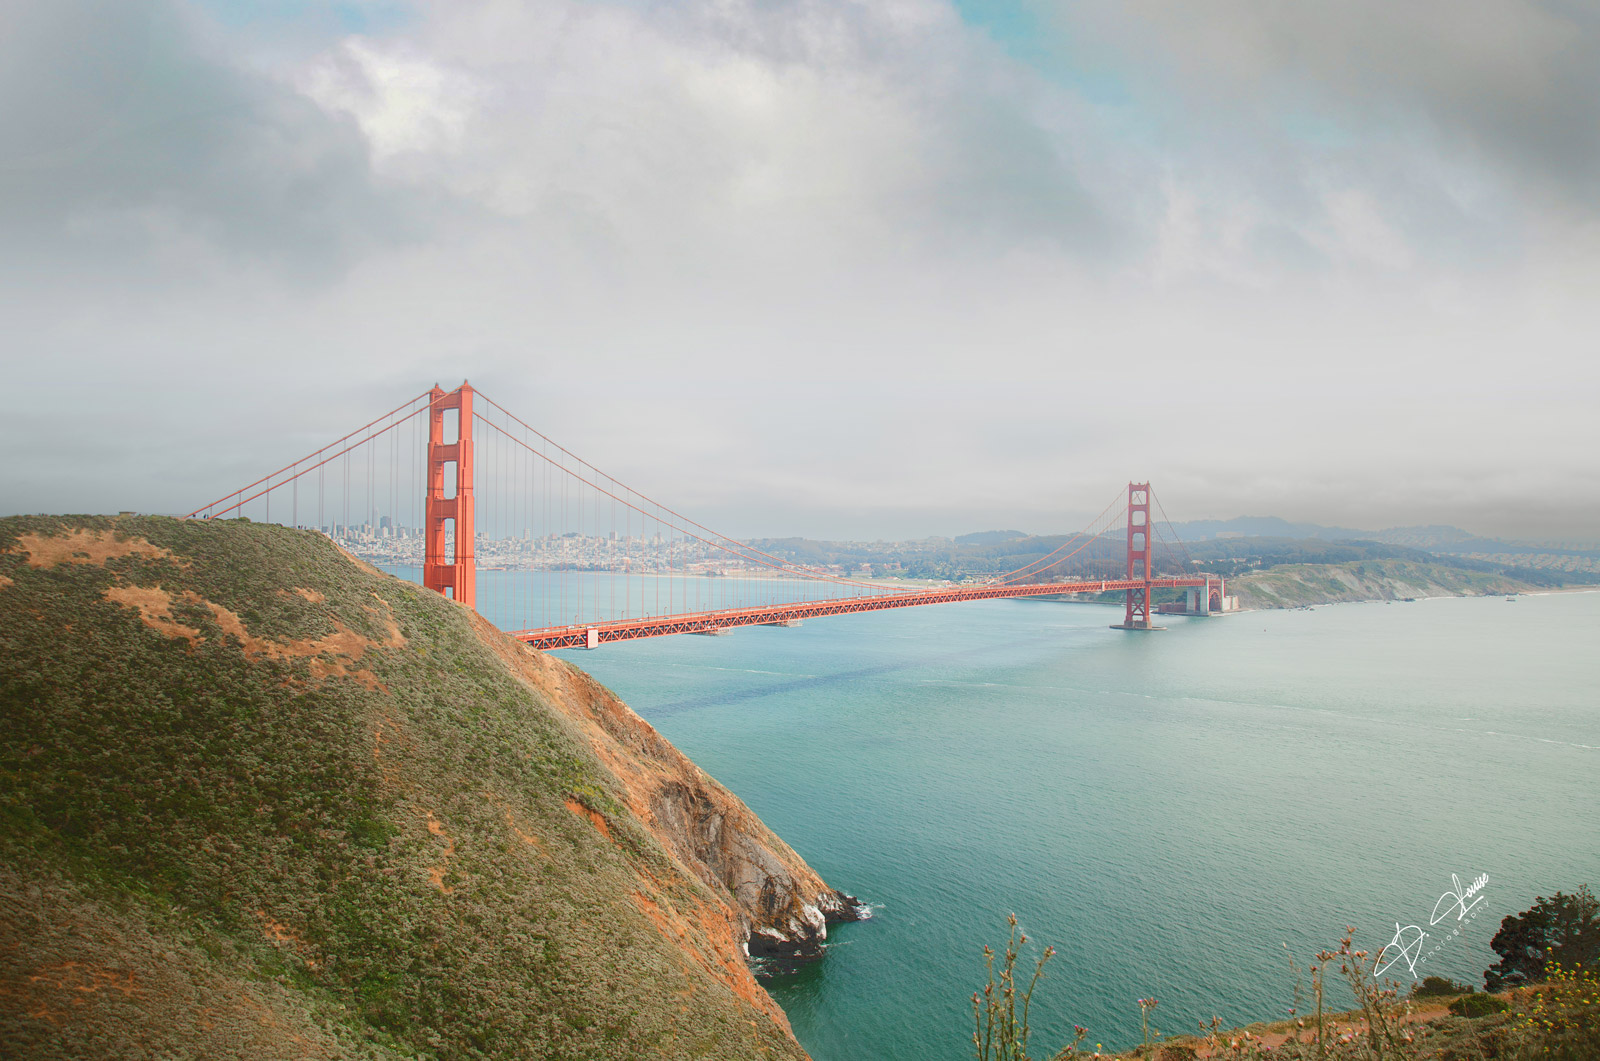 The Golden Gate Bridge on a misty morning in San Francisco